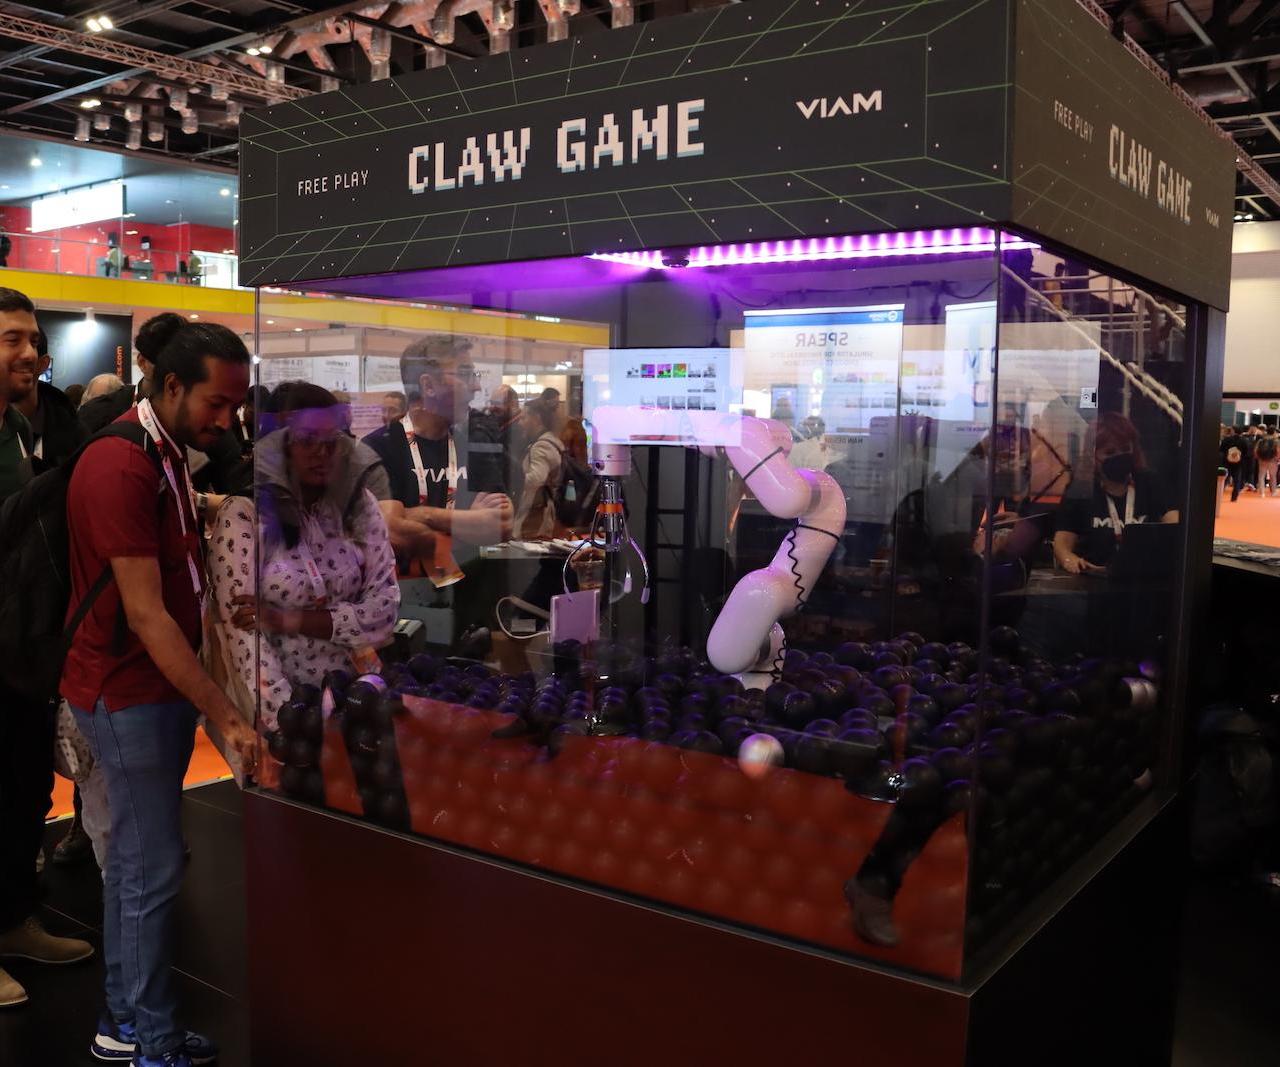 Build a Robotic Claw Arcade Game With a Raspberry Pi, a Robot Arm, and Viam